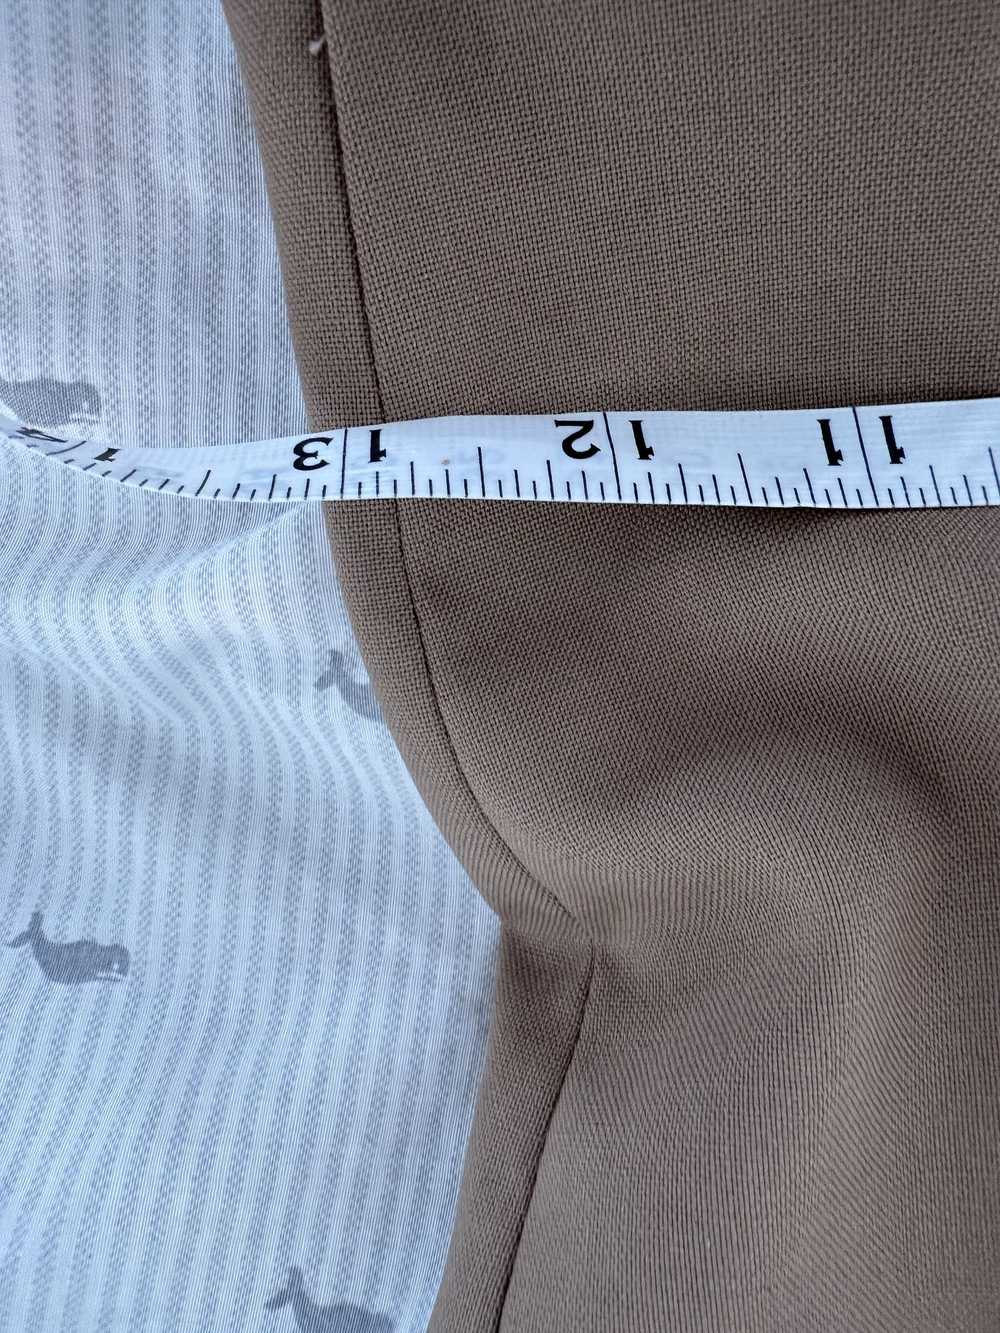 Marni Marni Pleated Trousers - image 9